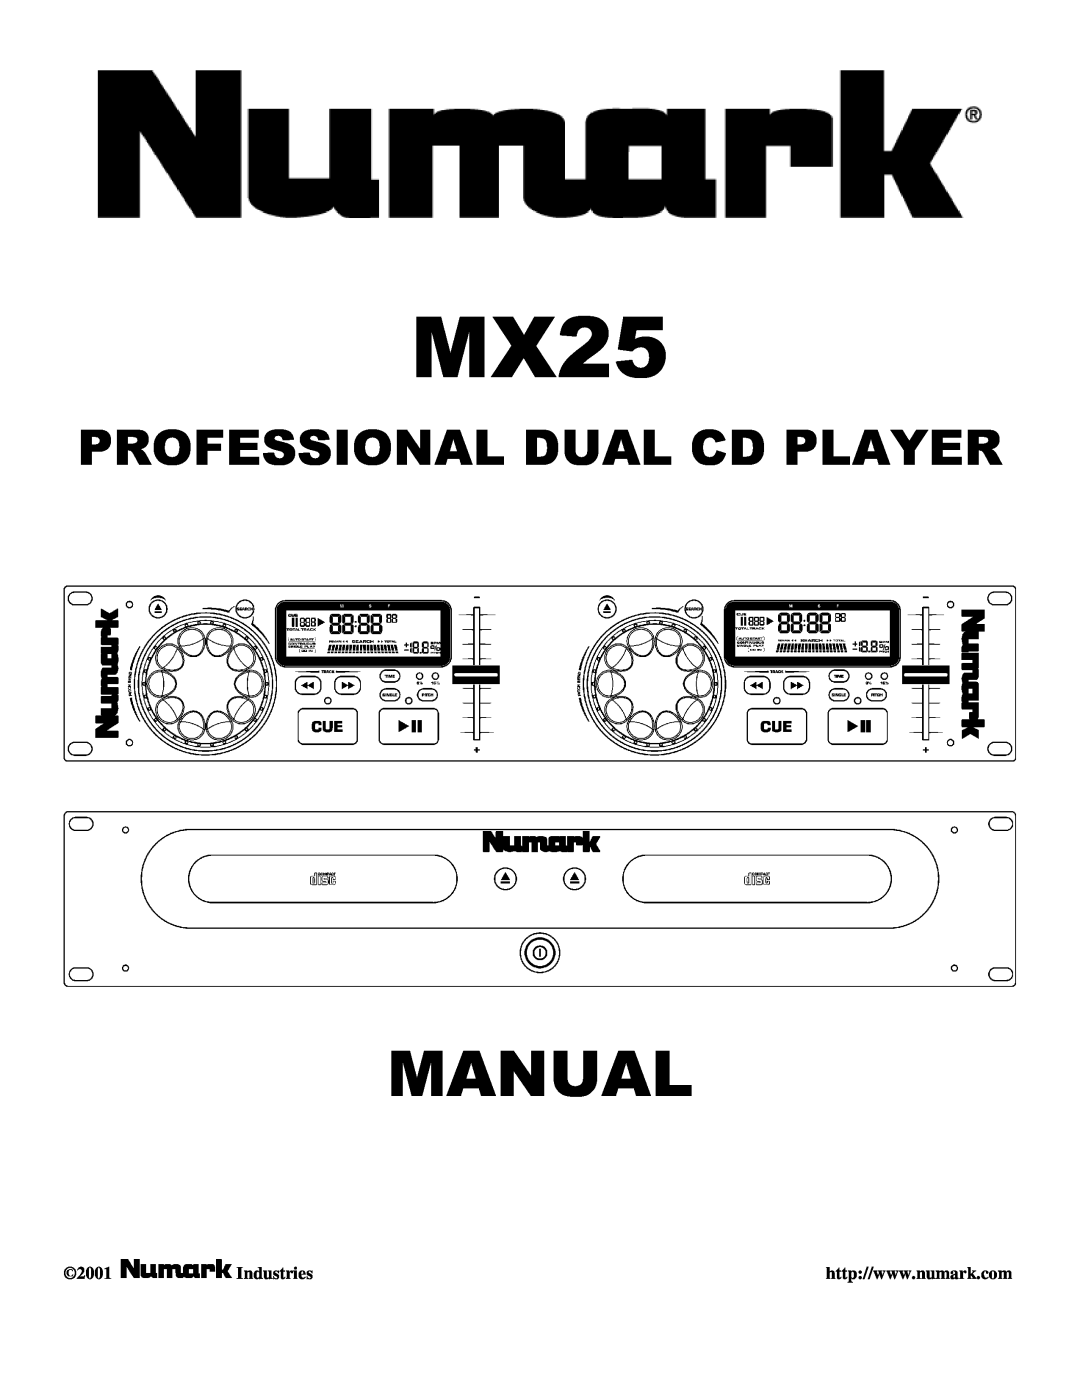 Numark Industries MX25 manual Manual, Professional Dual Cd Player, Industries, 2001 